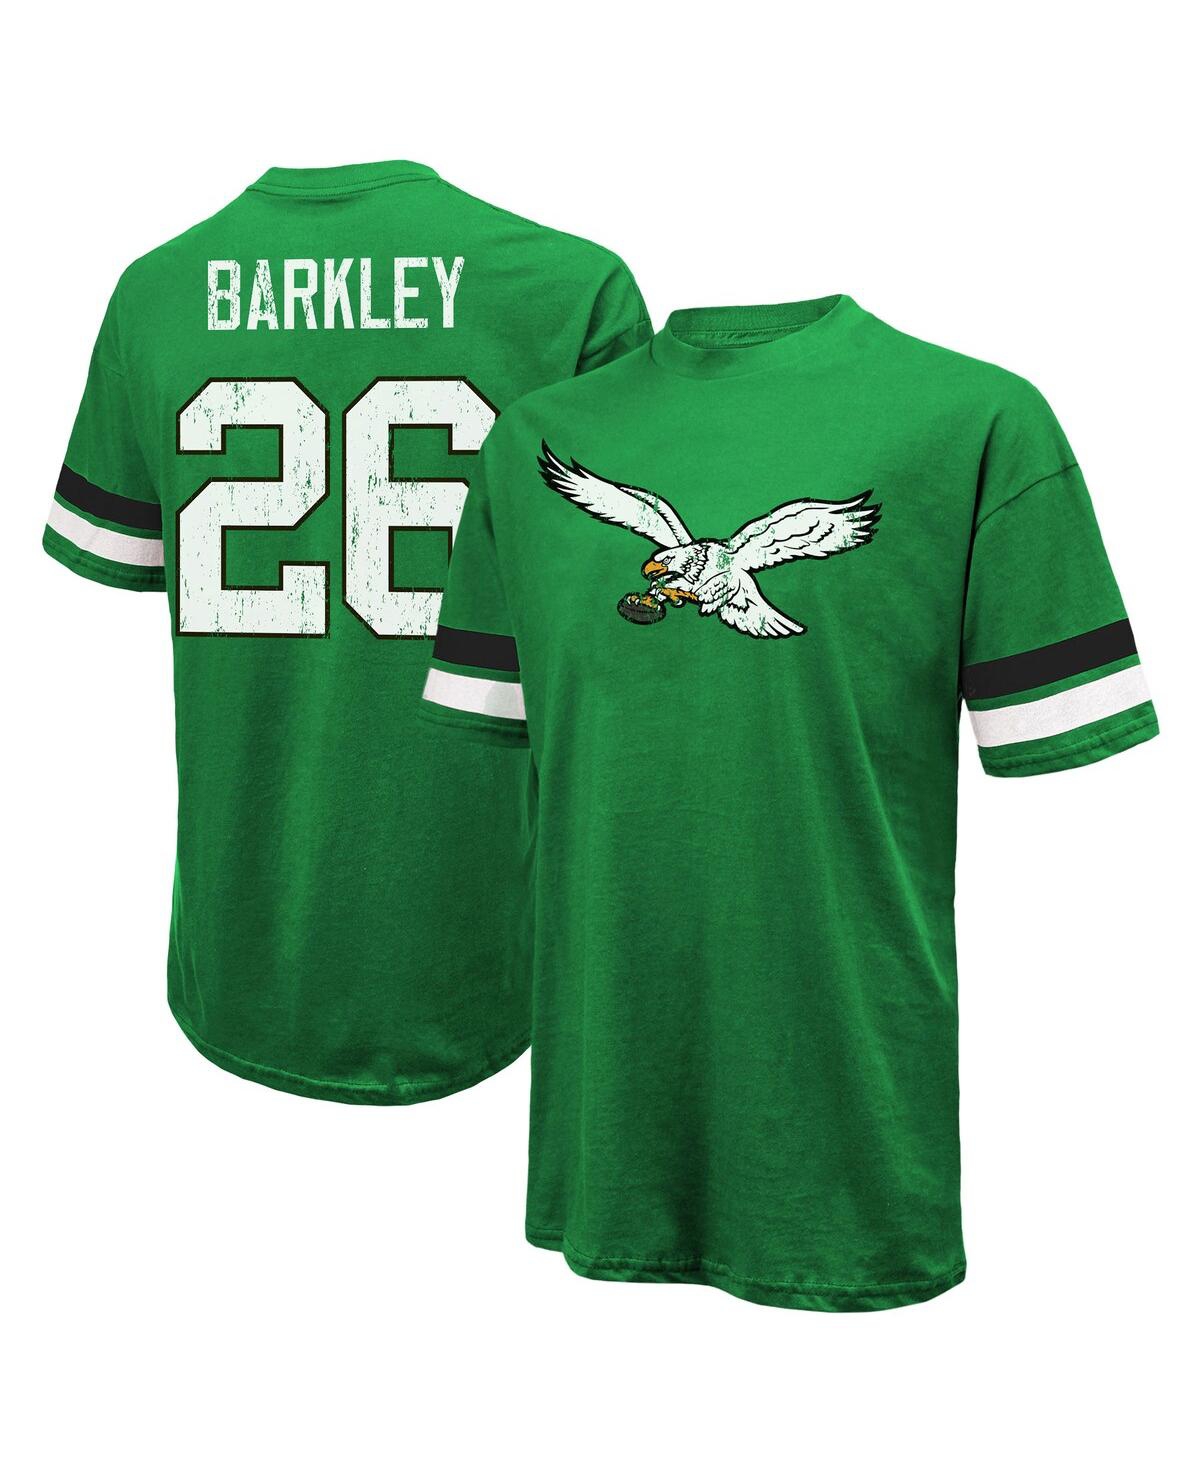 Threads Men's Saquon Barkley Kelly Green Philadelphia Eagles Name Number Oversized T-Shirt - Kelly Green